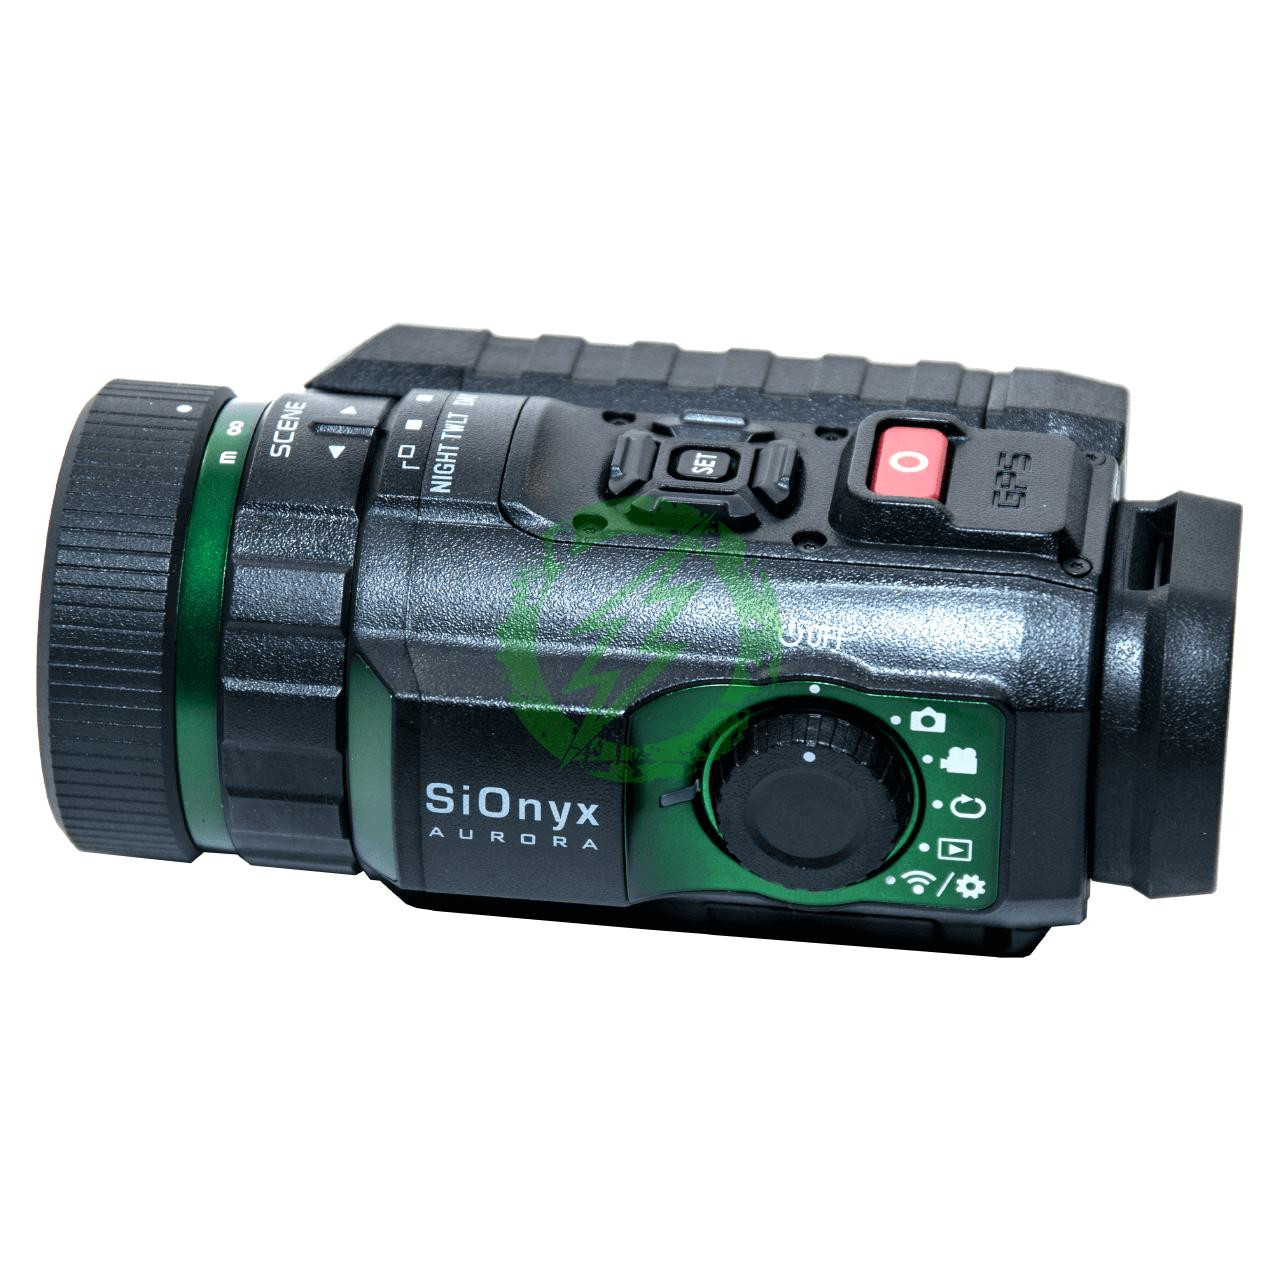  Sionyx Aurora Digital Night Vision Camera | Includes Case & Accessories 